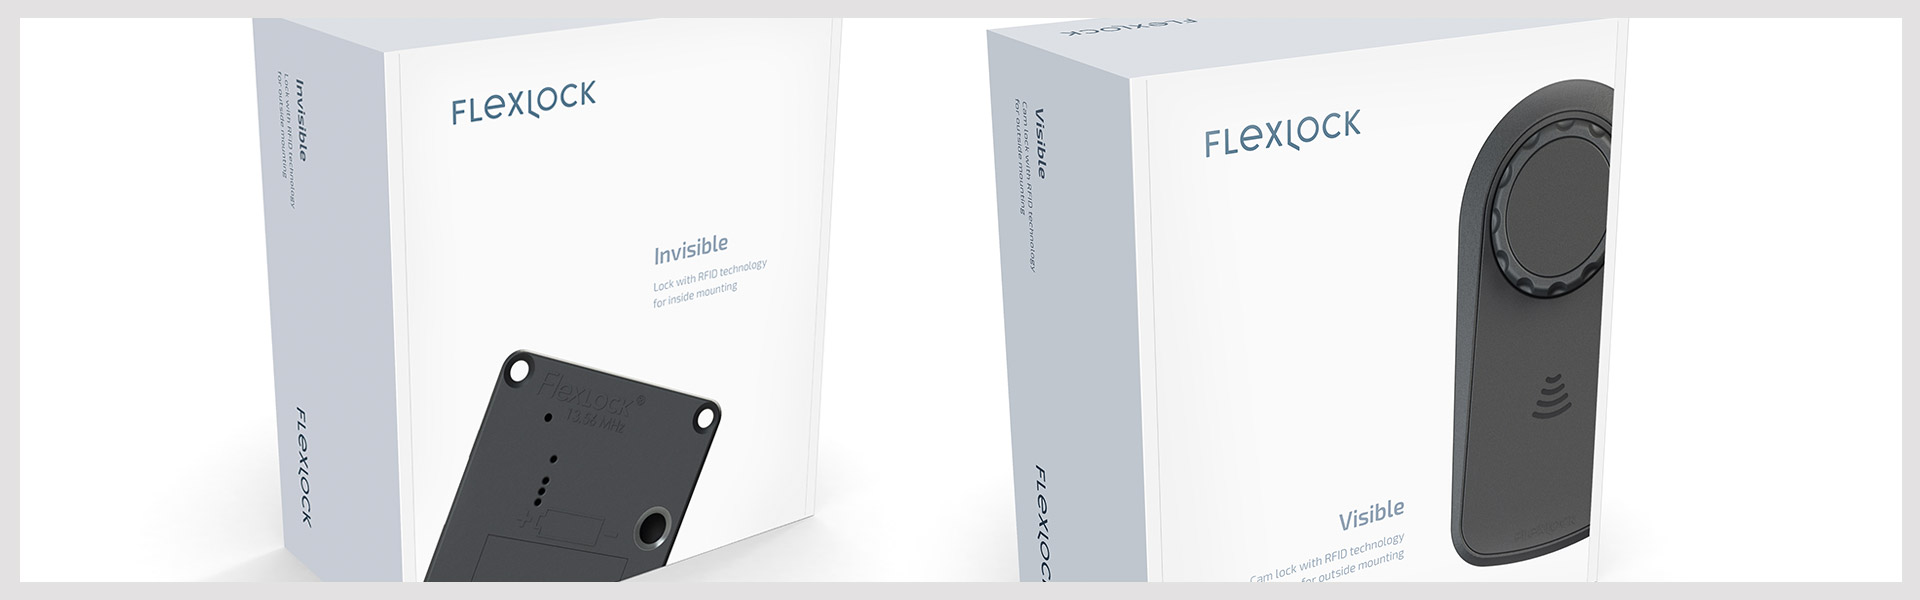 Flexlock product boxes